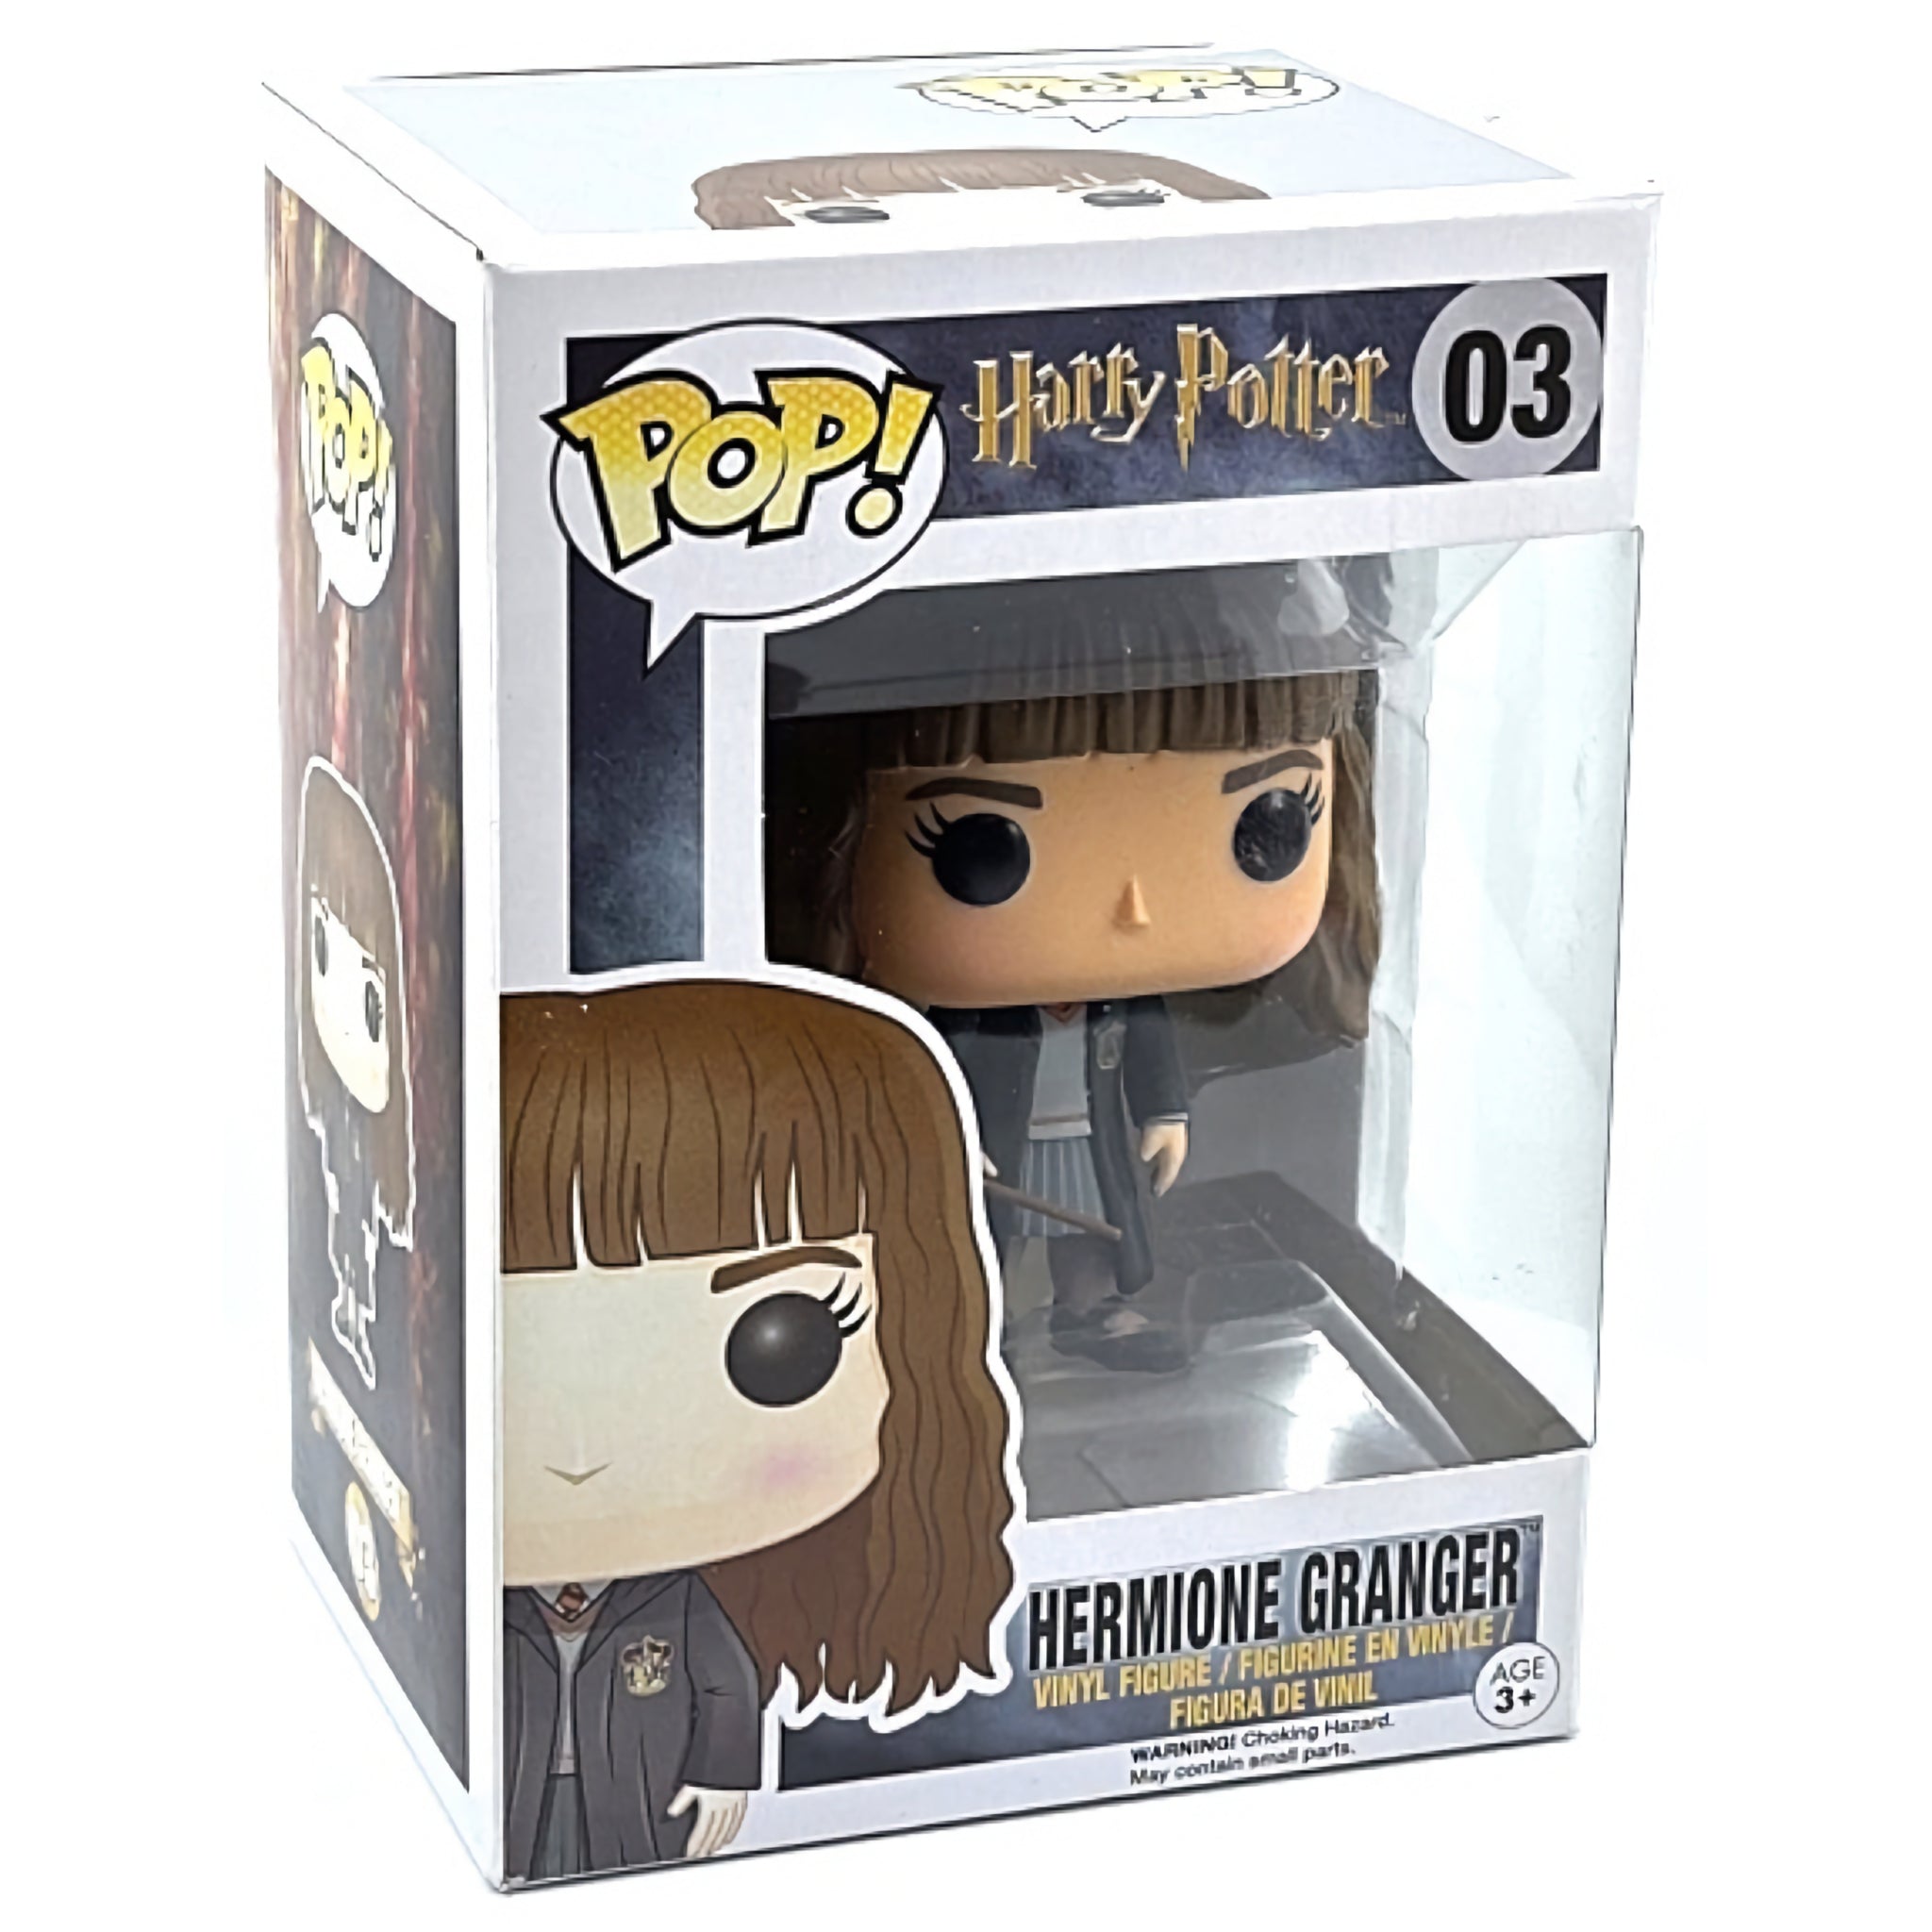 Hermione Granger Funko Pop!